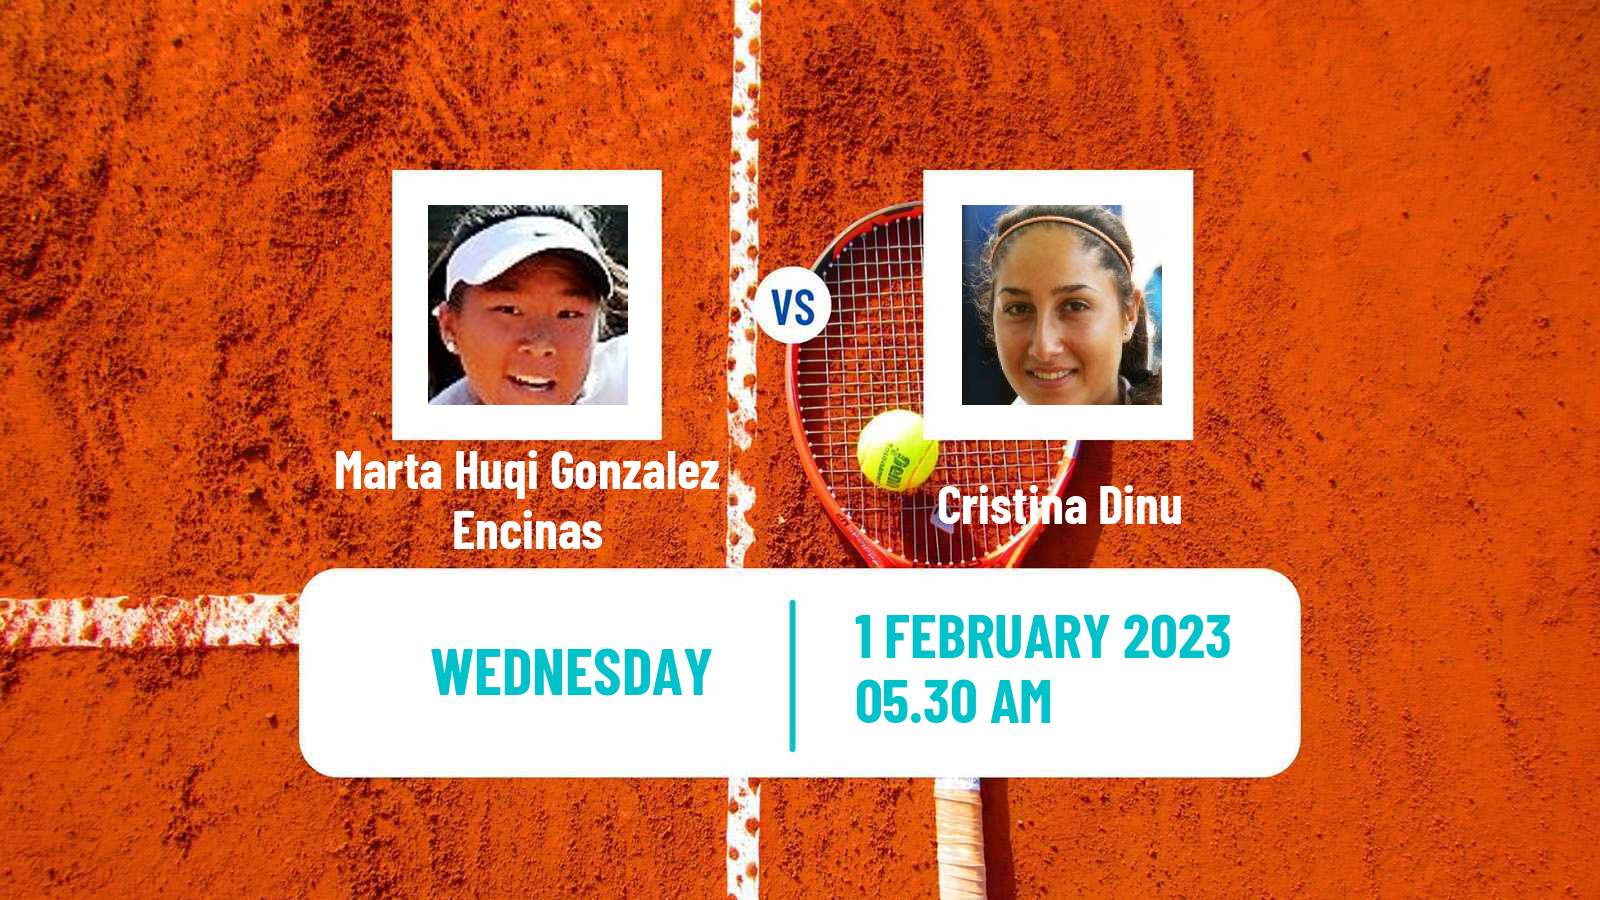 Tennis ITF Tournaments Marta Huqi Gonzalez Encinas - Cristina Dinu